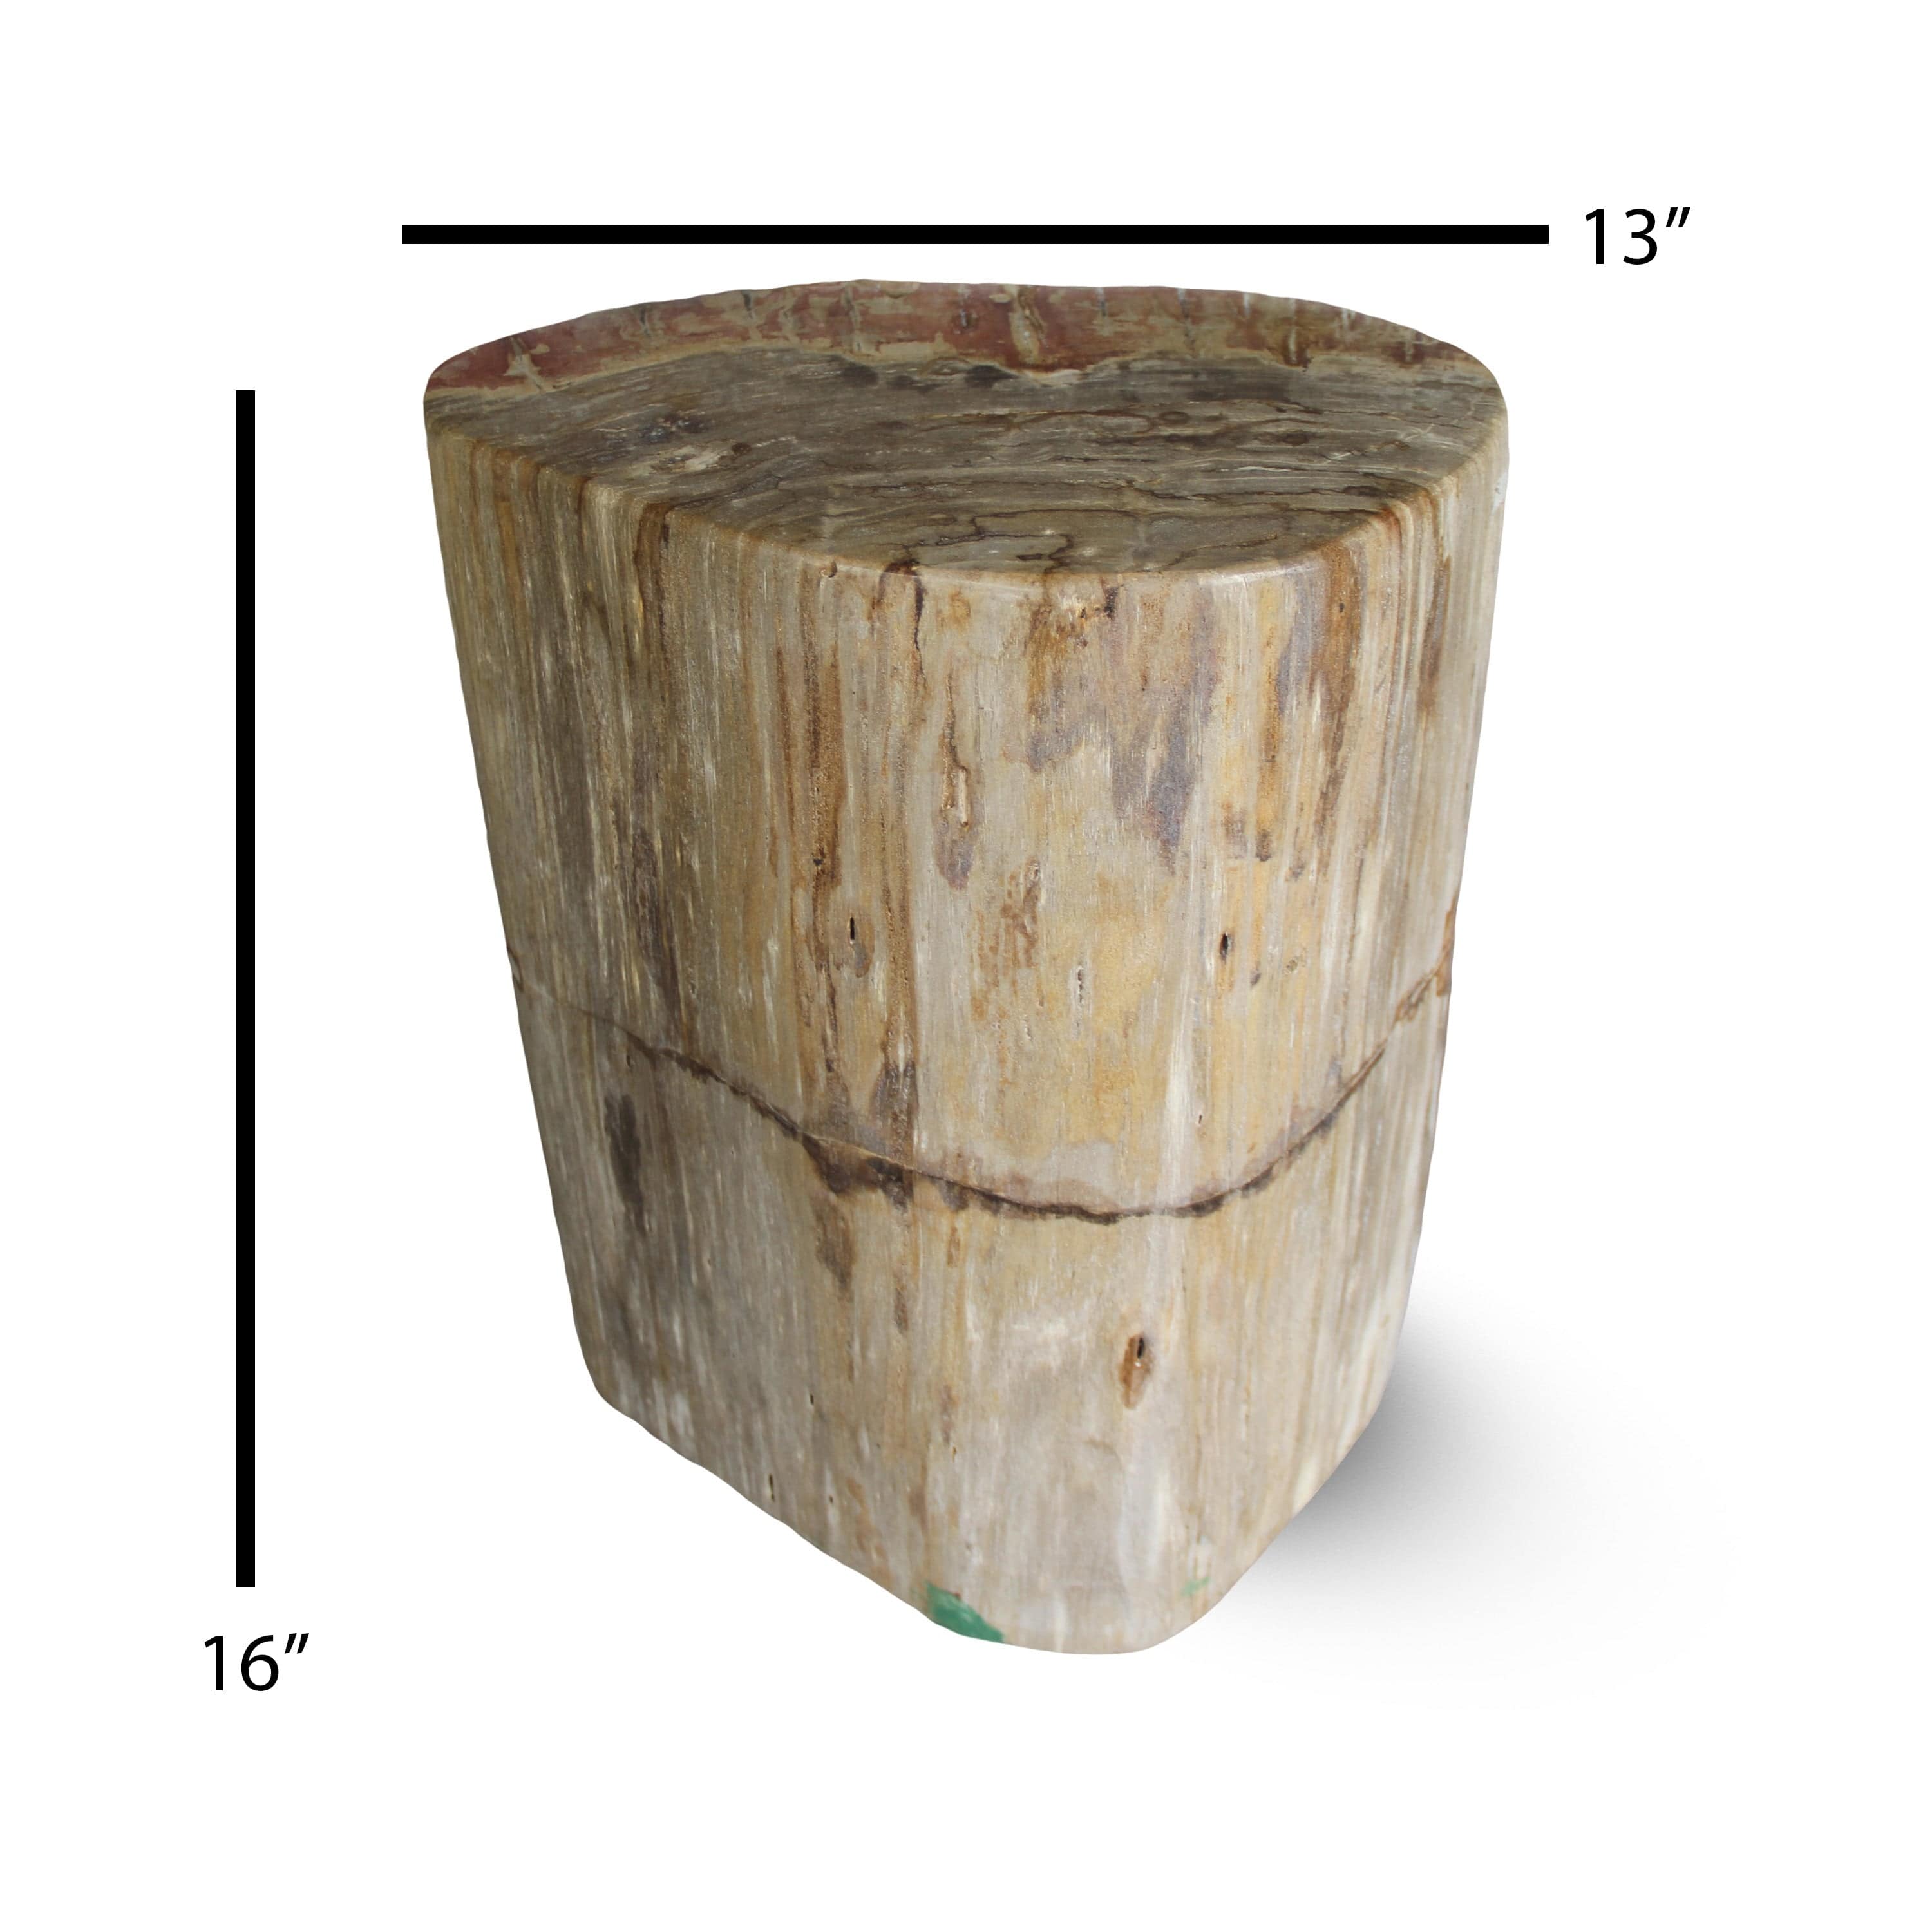 Kalifano Petrified Wood Petrified Wood Round Stump / Stool from Indonesia - 16" / 134 lbs PWS2600.005